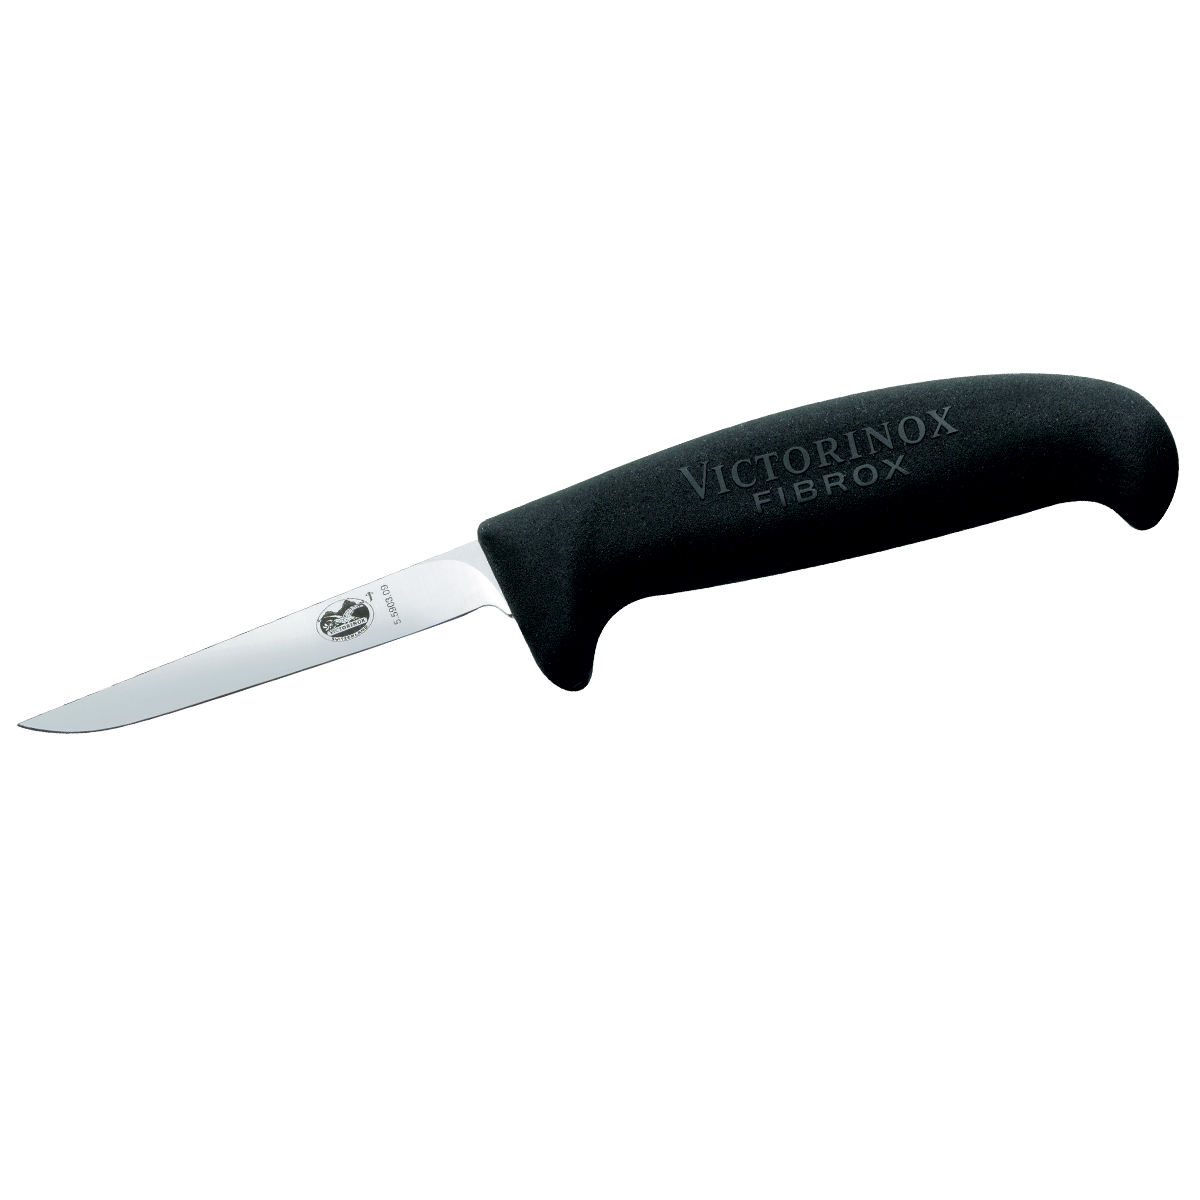 Victorinox Poultry Boning Knife, 9cm (3 3/4) - Medium Fibrox Handle - Black